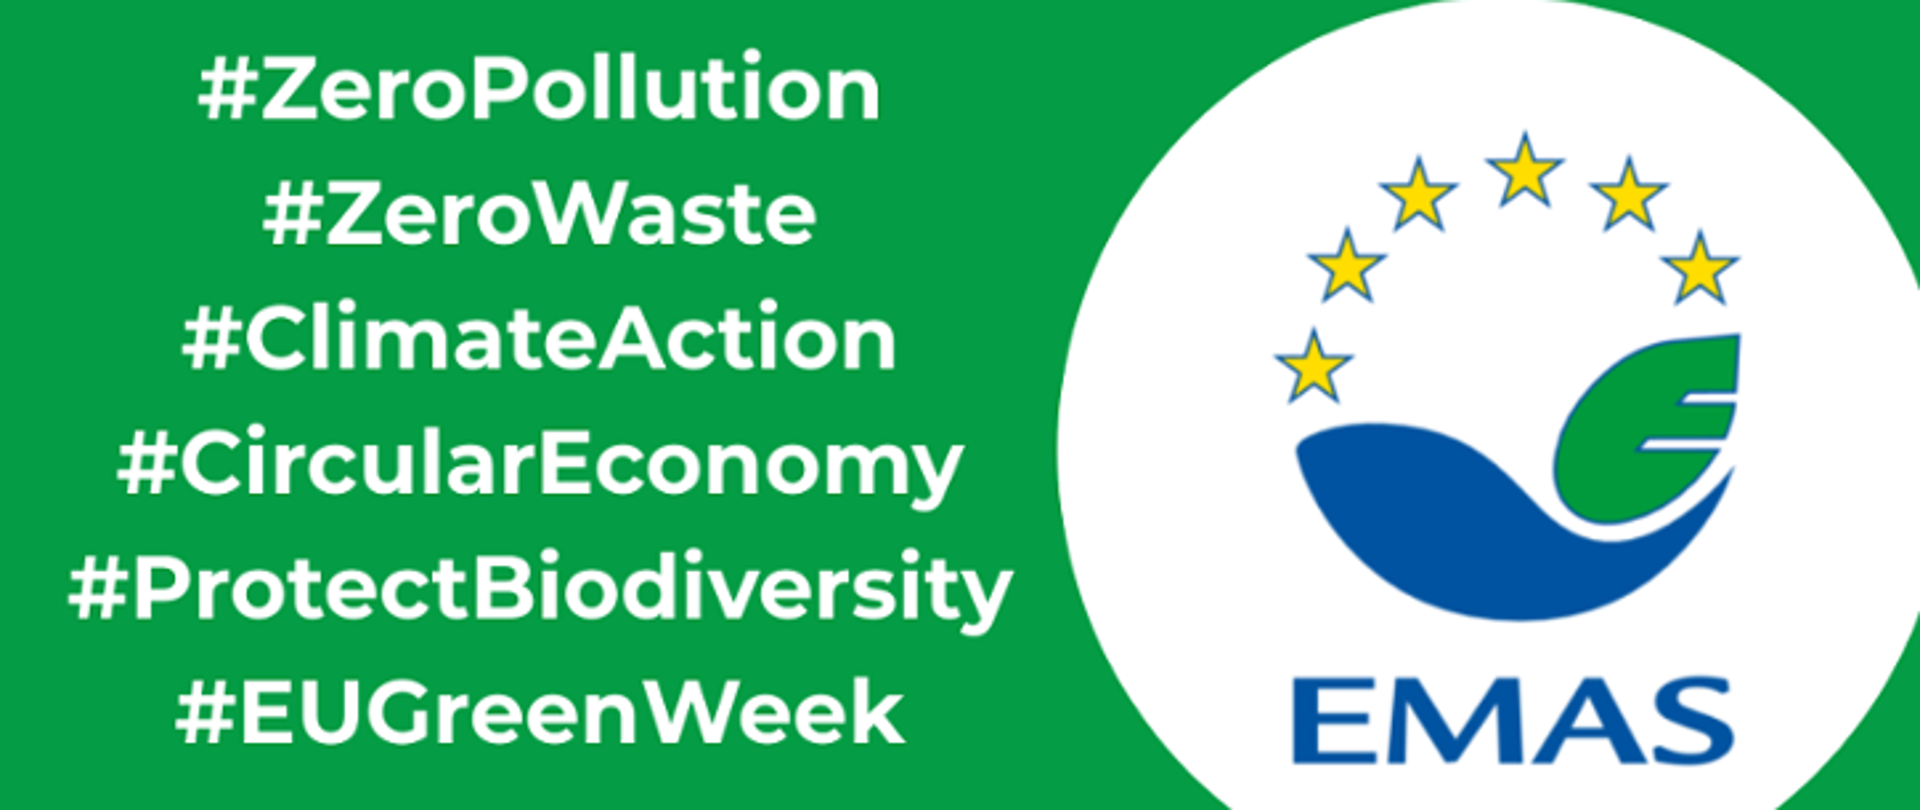 Po lewej stronie napisy z hasztagami: Zero Pollution, Zero Waste, Climate Action, Circular Economy, Protect Biodiversity, EU Green Week. Po lewej stronie logo EMAS. 